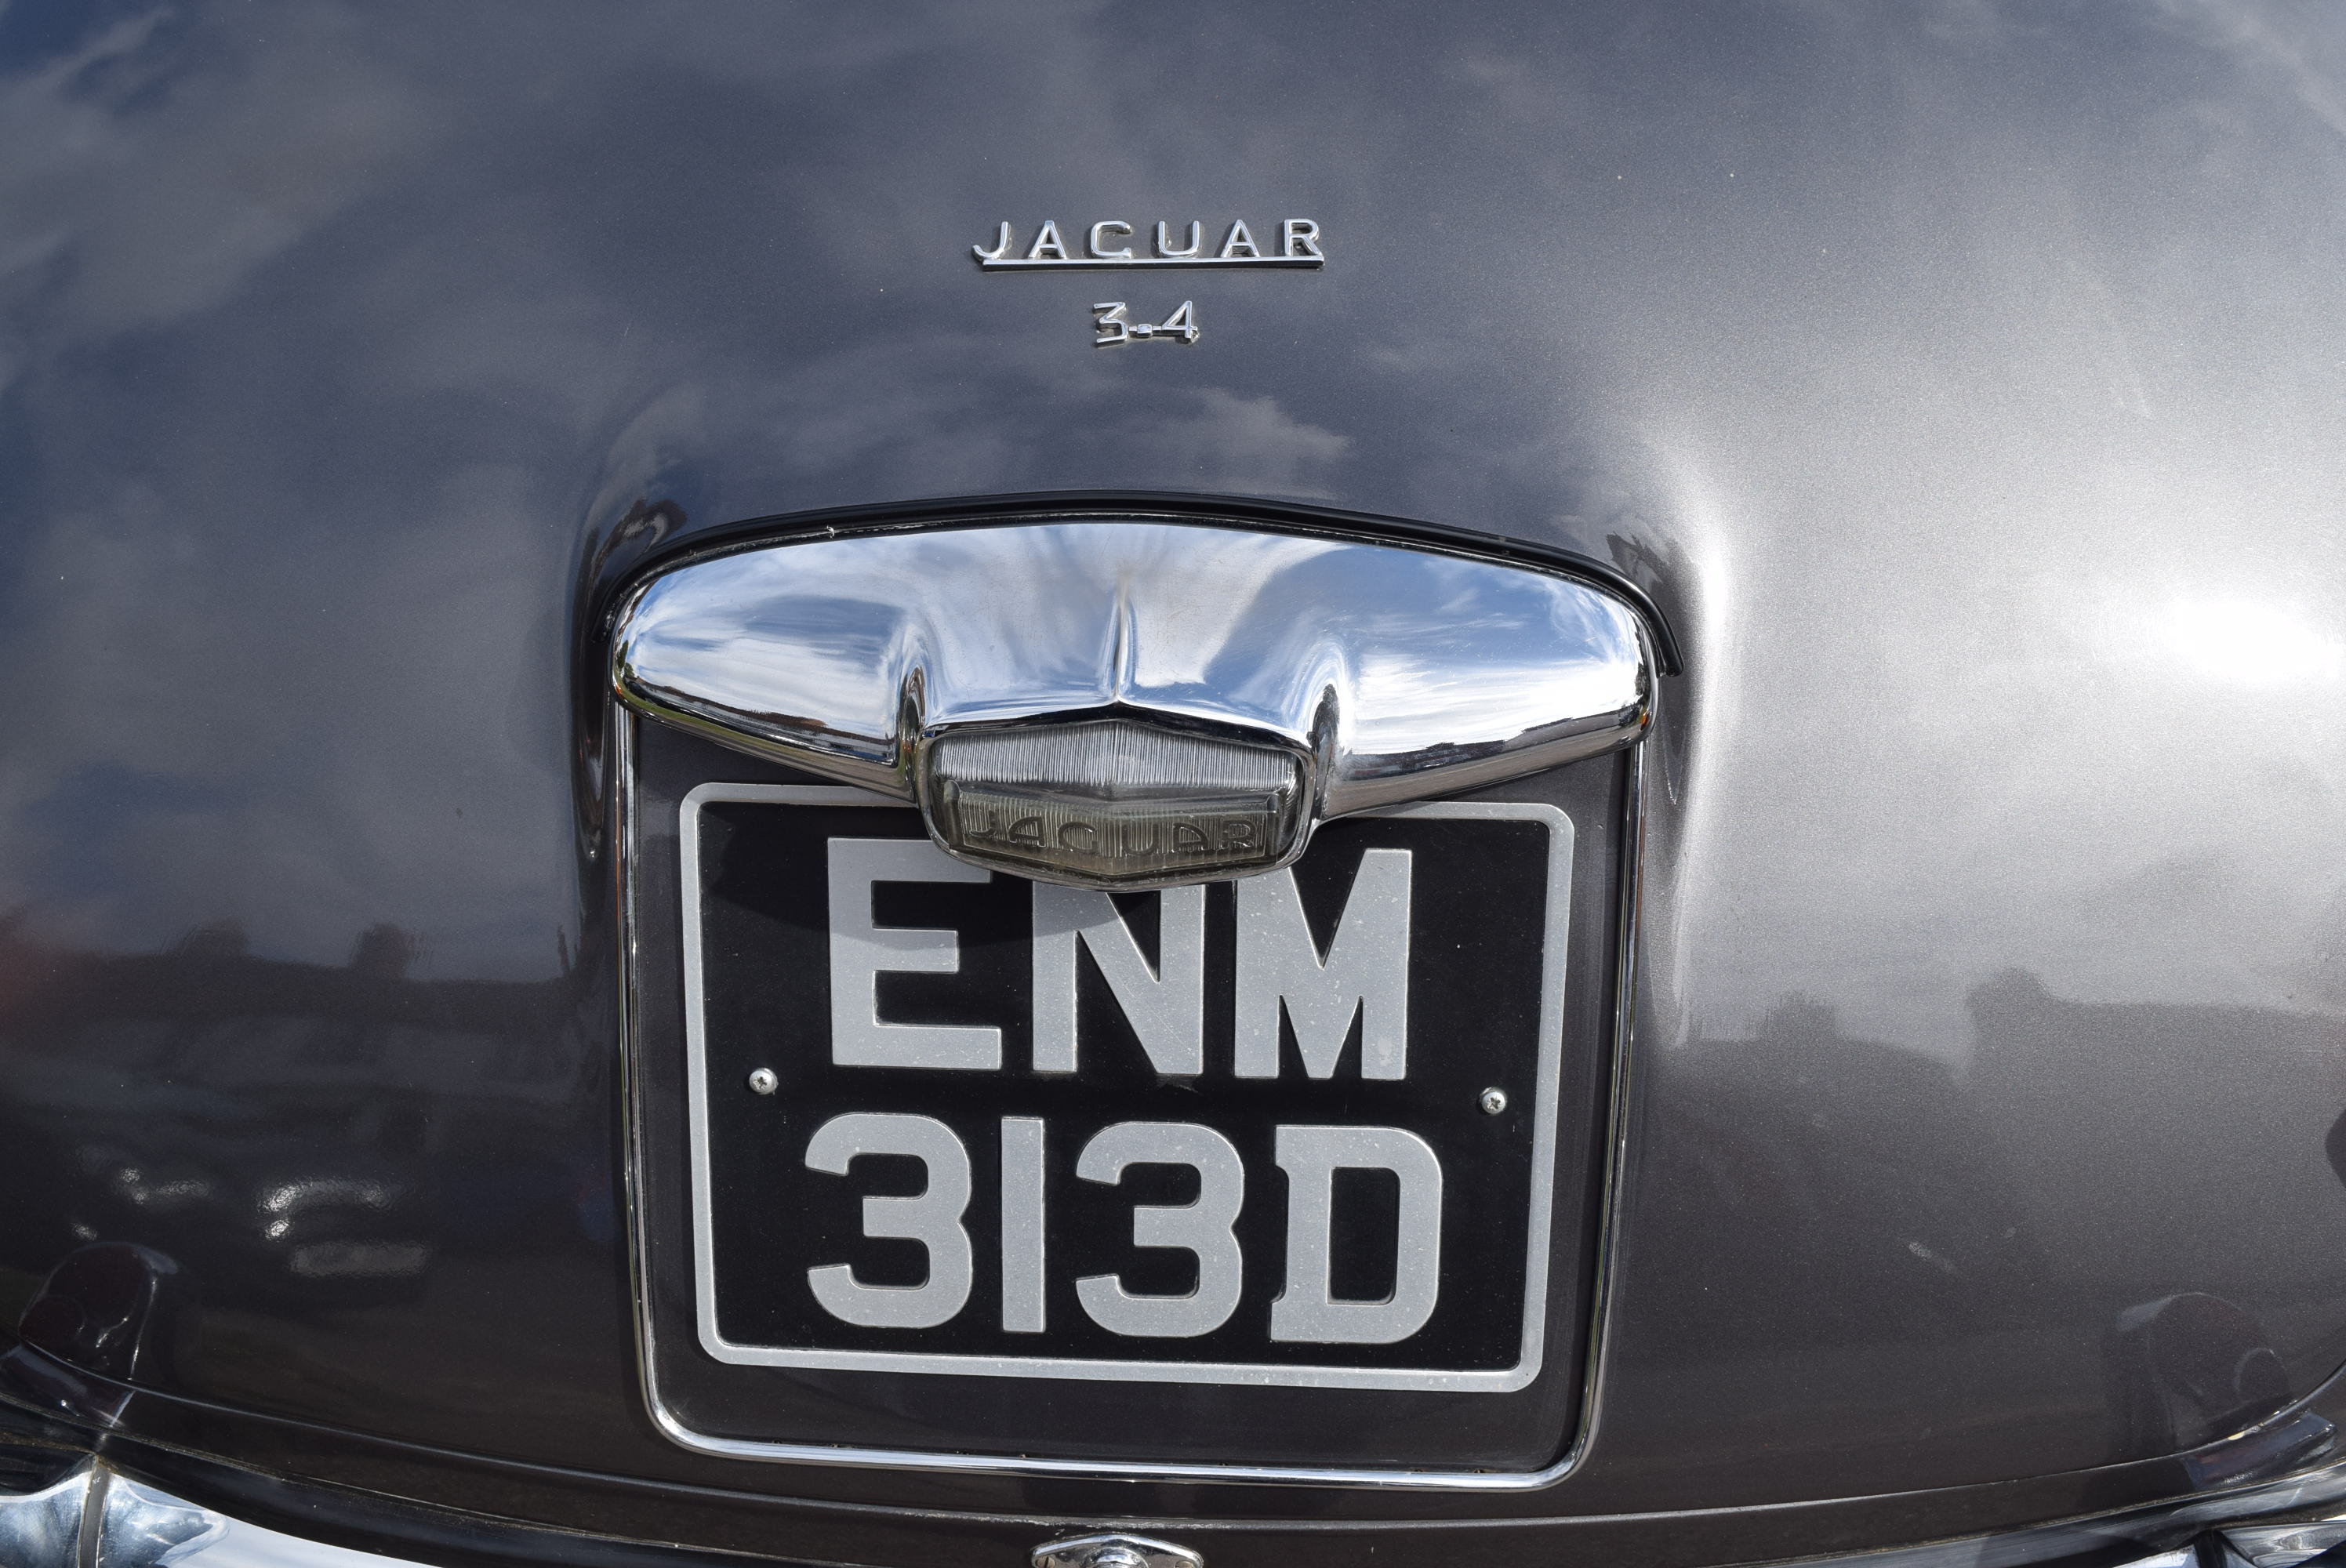 Jaguar MkII 3.4 MOD